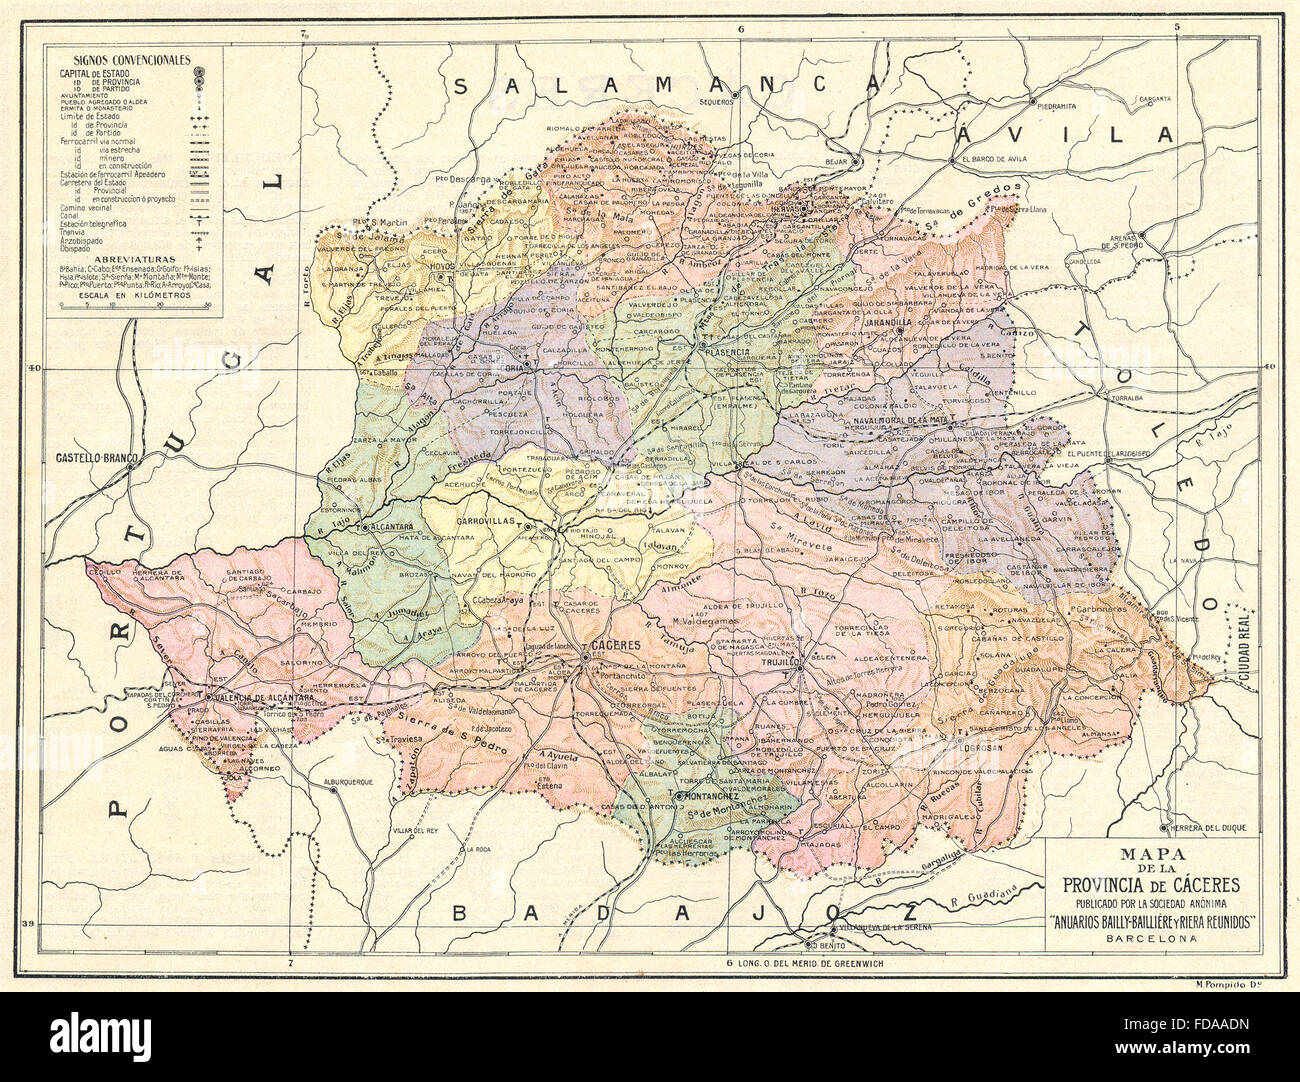 SPAIN: Mapa de la Provincia de Caceres, 1913 Stock Photo